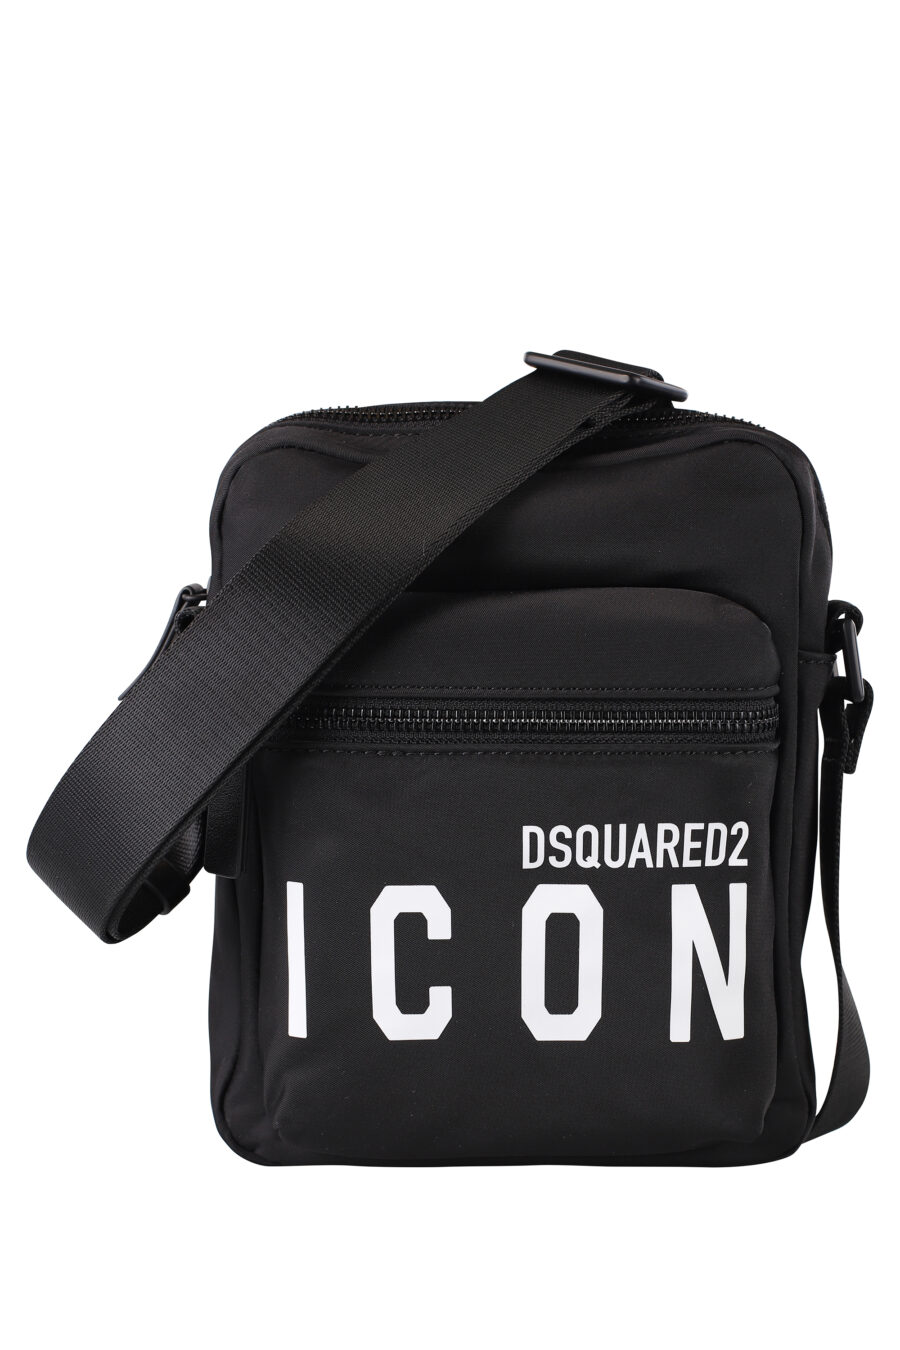 Black shoulder bag with white "icon" logo - IMG 1303